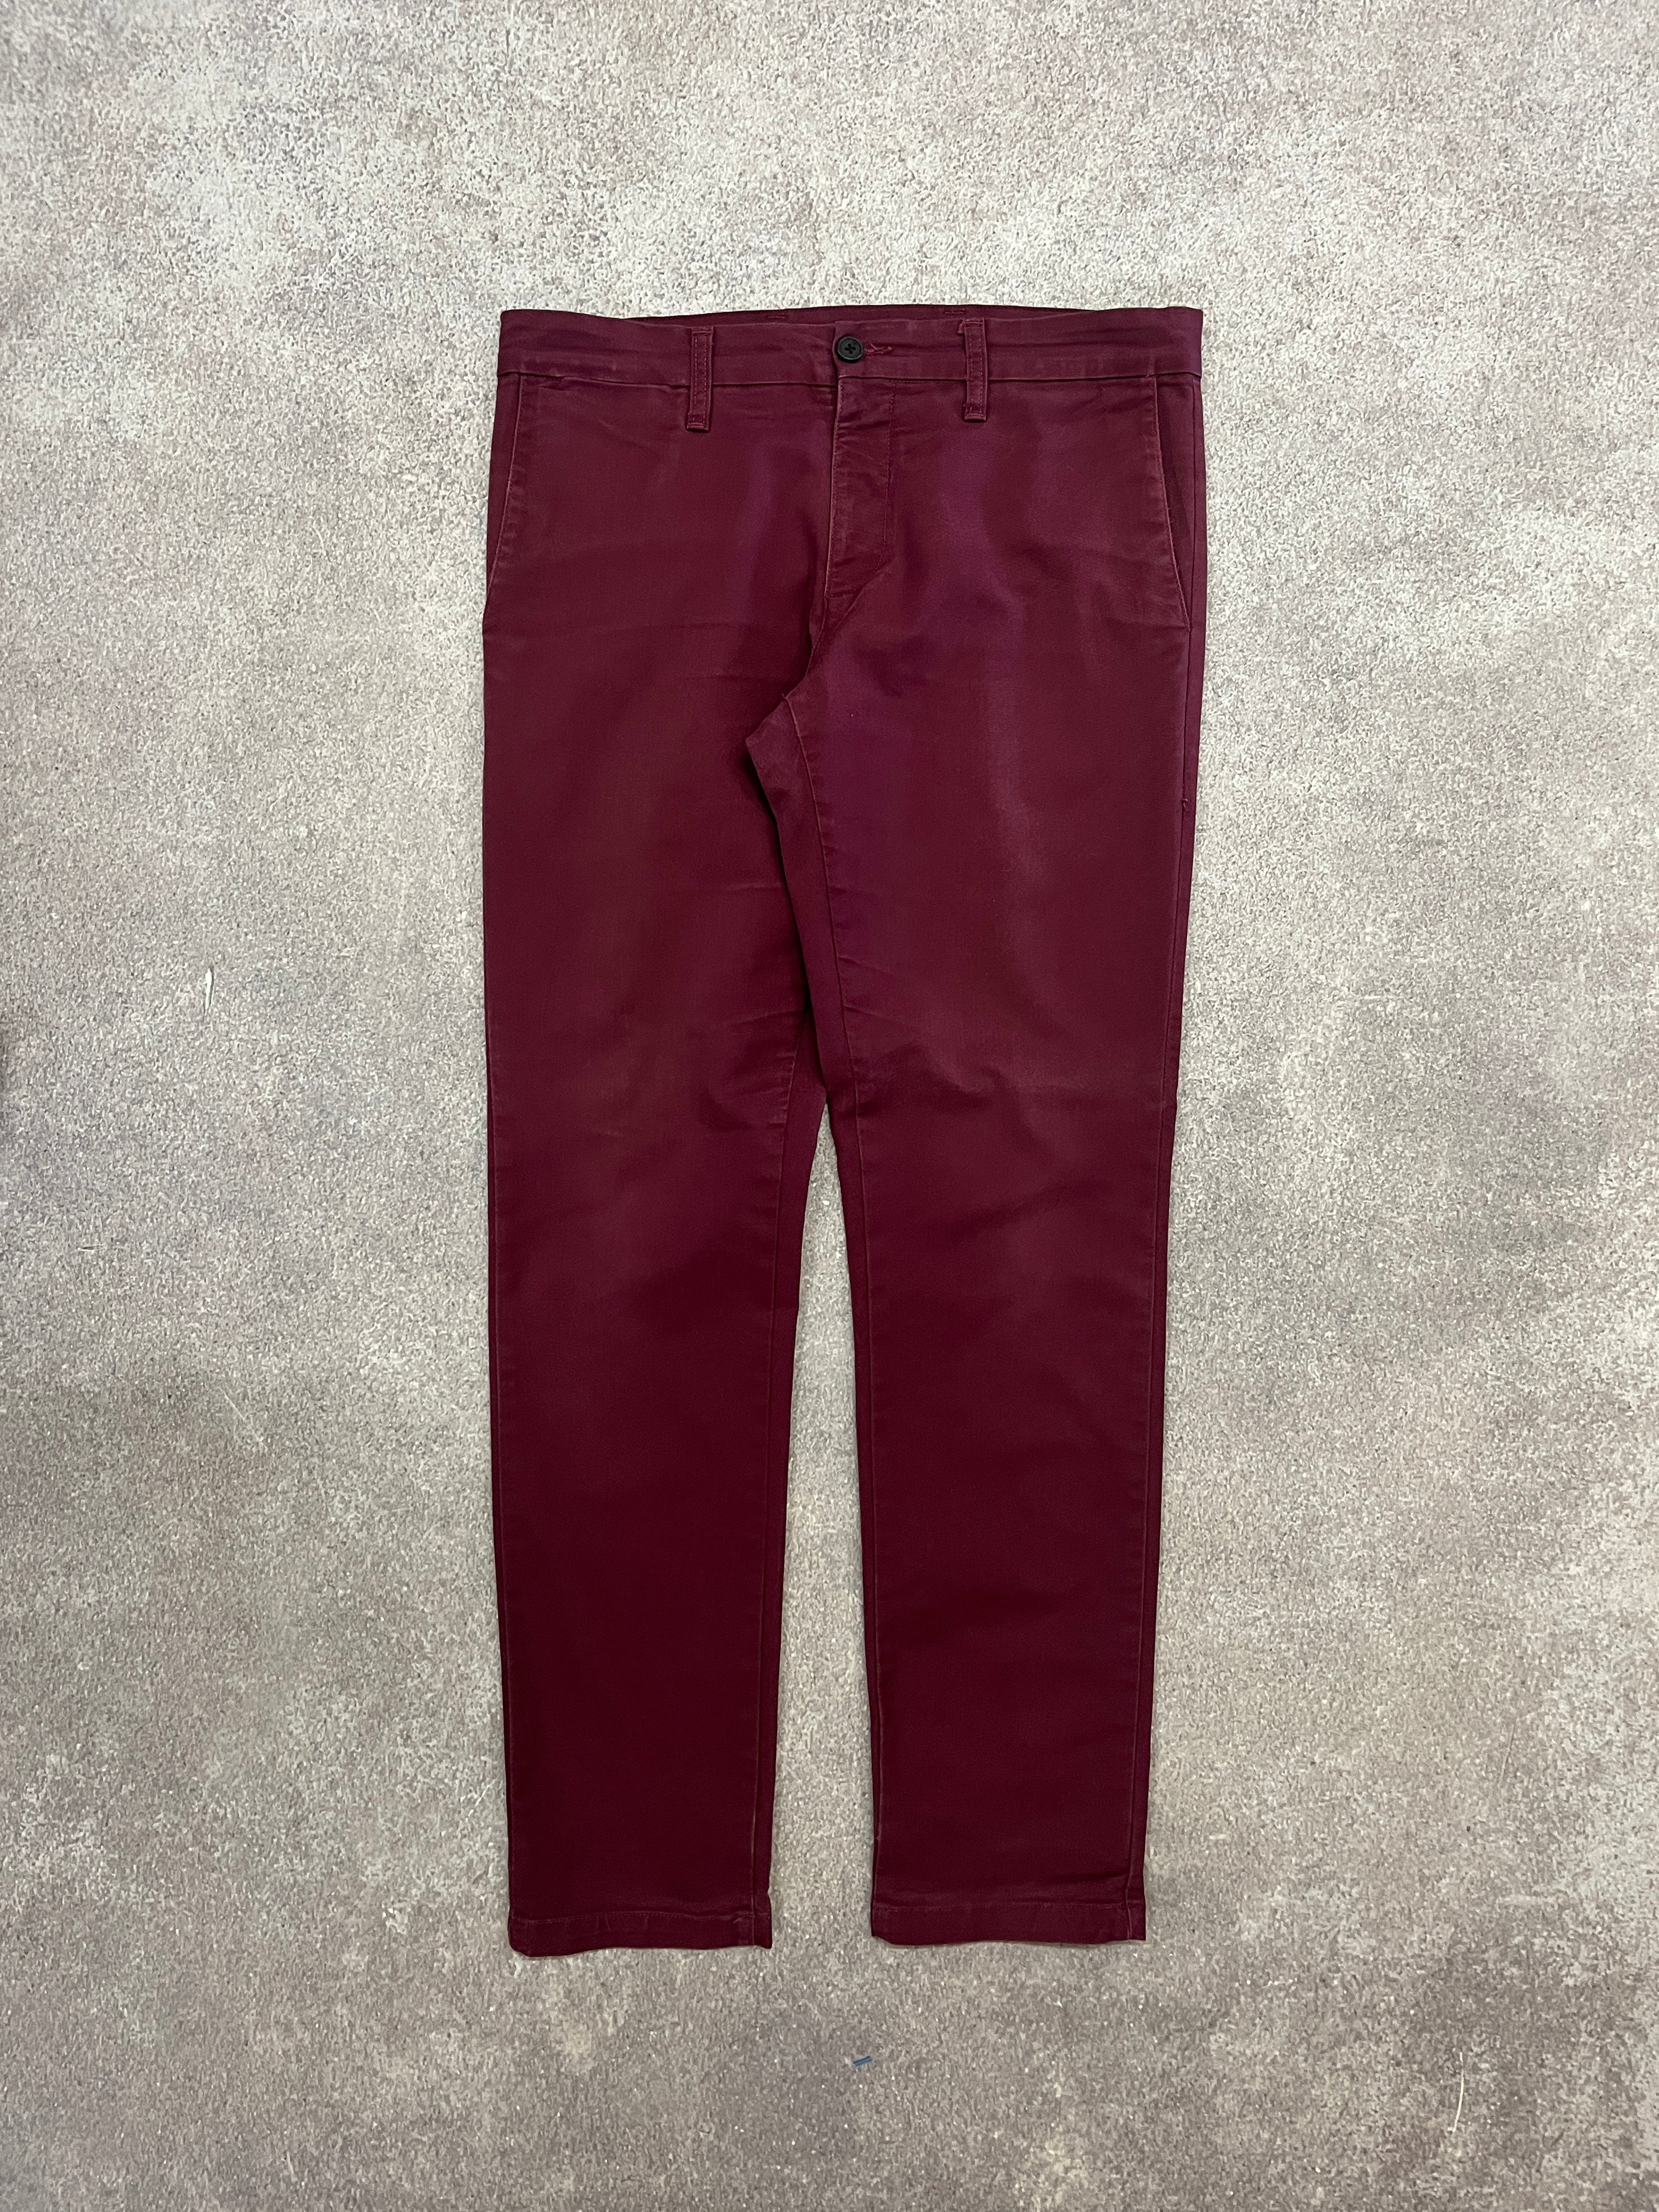 Vintage Carhartt Chino Pants Red // W32 L32 - RHAGHOUSE VINTAGE